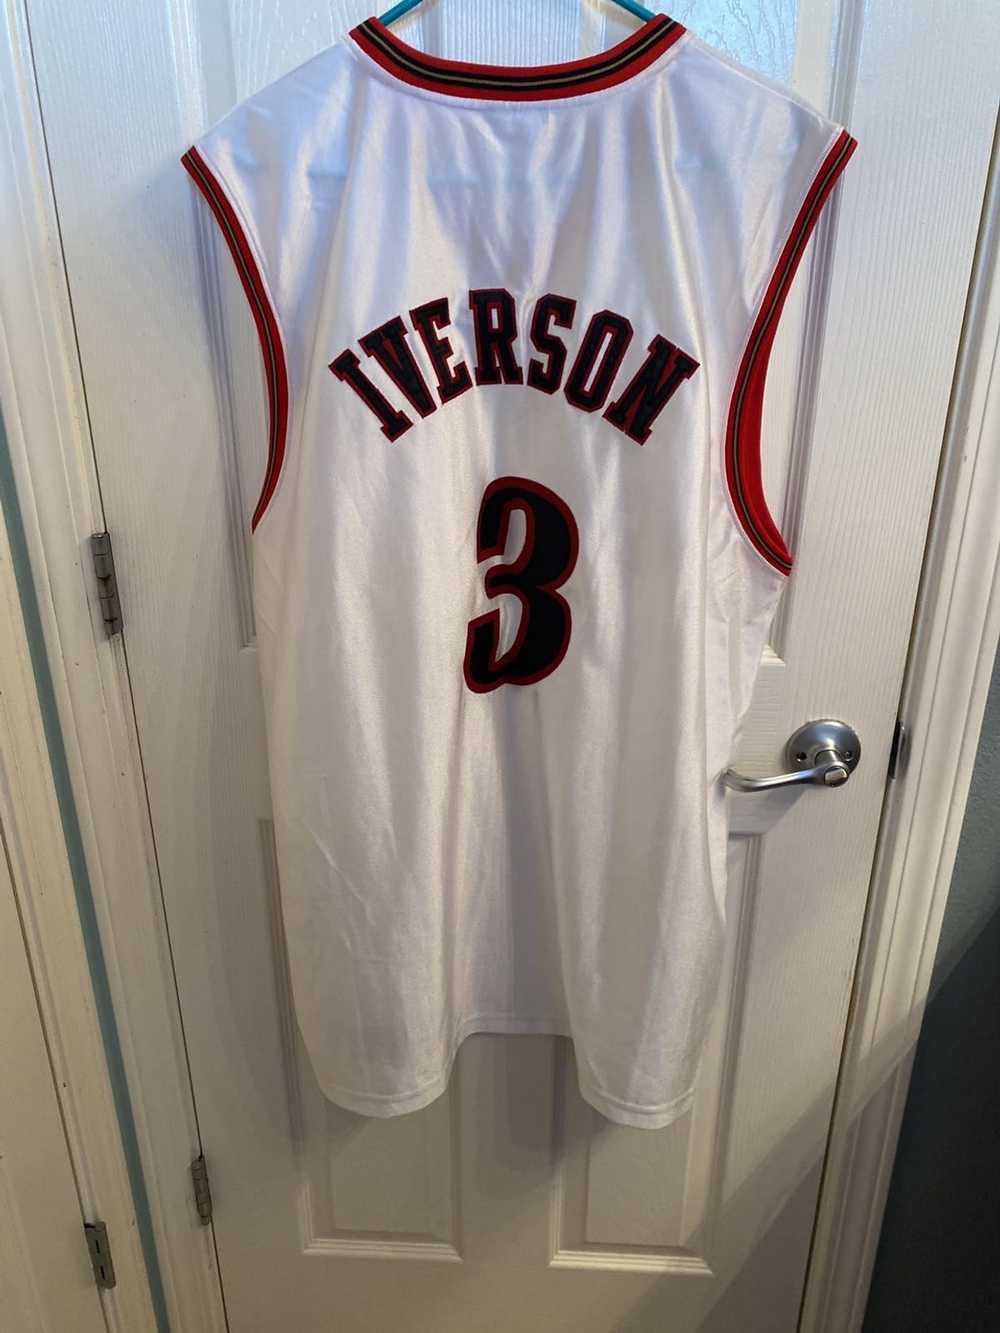 Reebok Allen iverson jersey authentic vintage - image 2